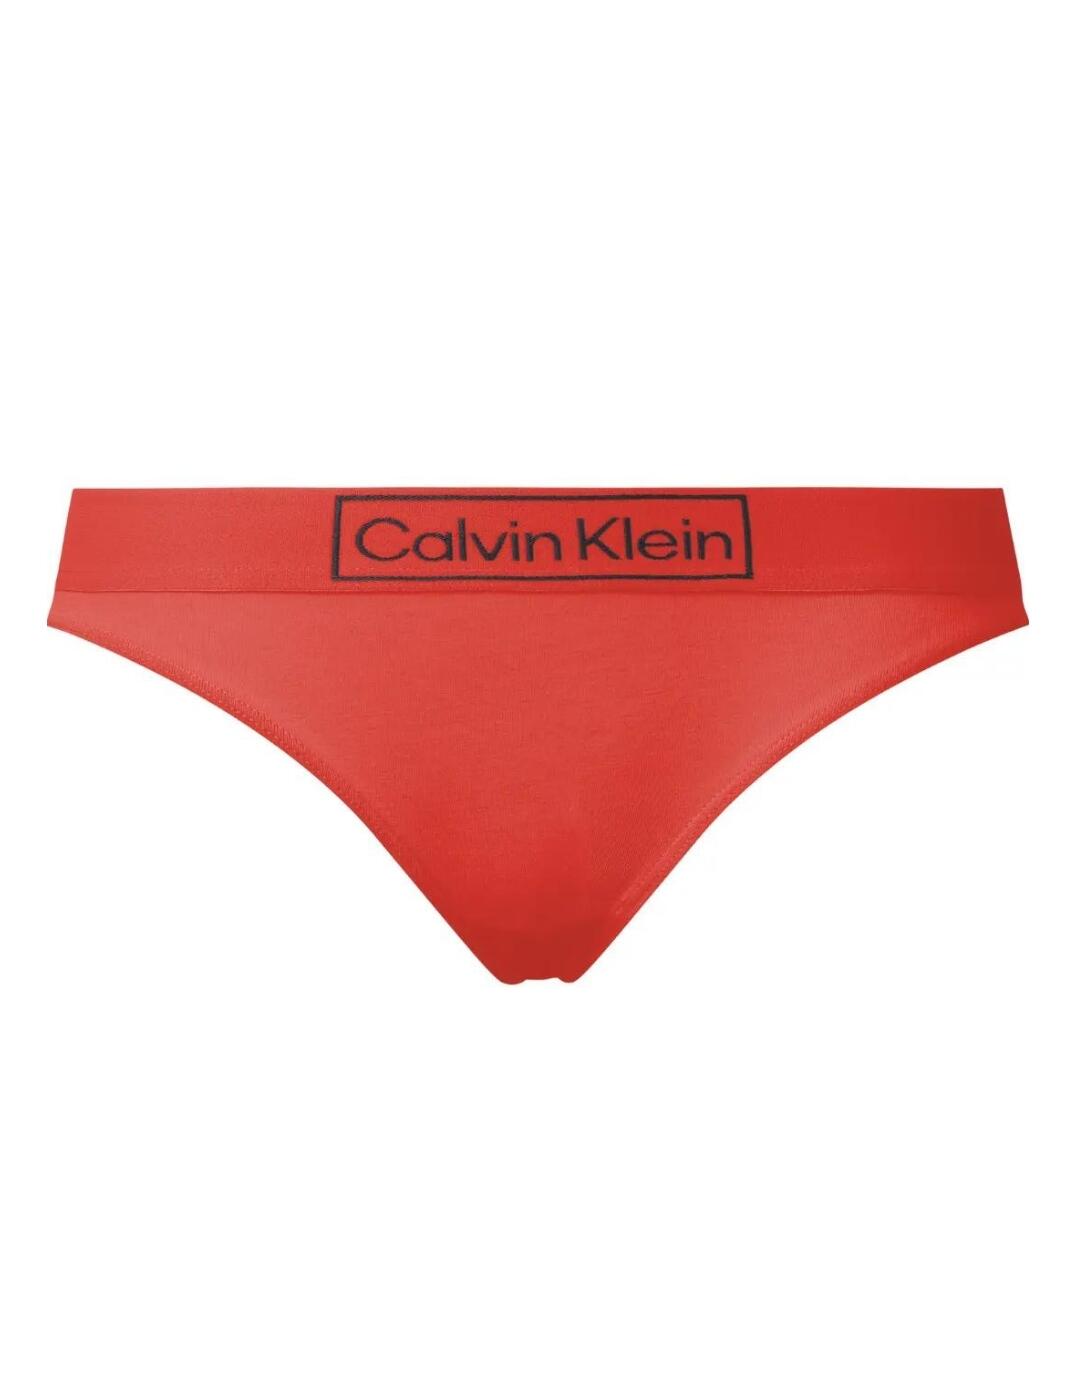 Calvin Klein Reimagined Heritage Bikini Brief Tuscan Terracotta